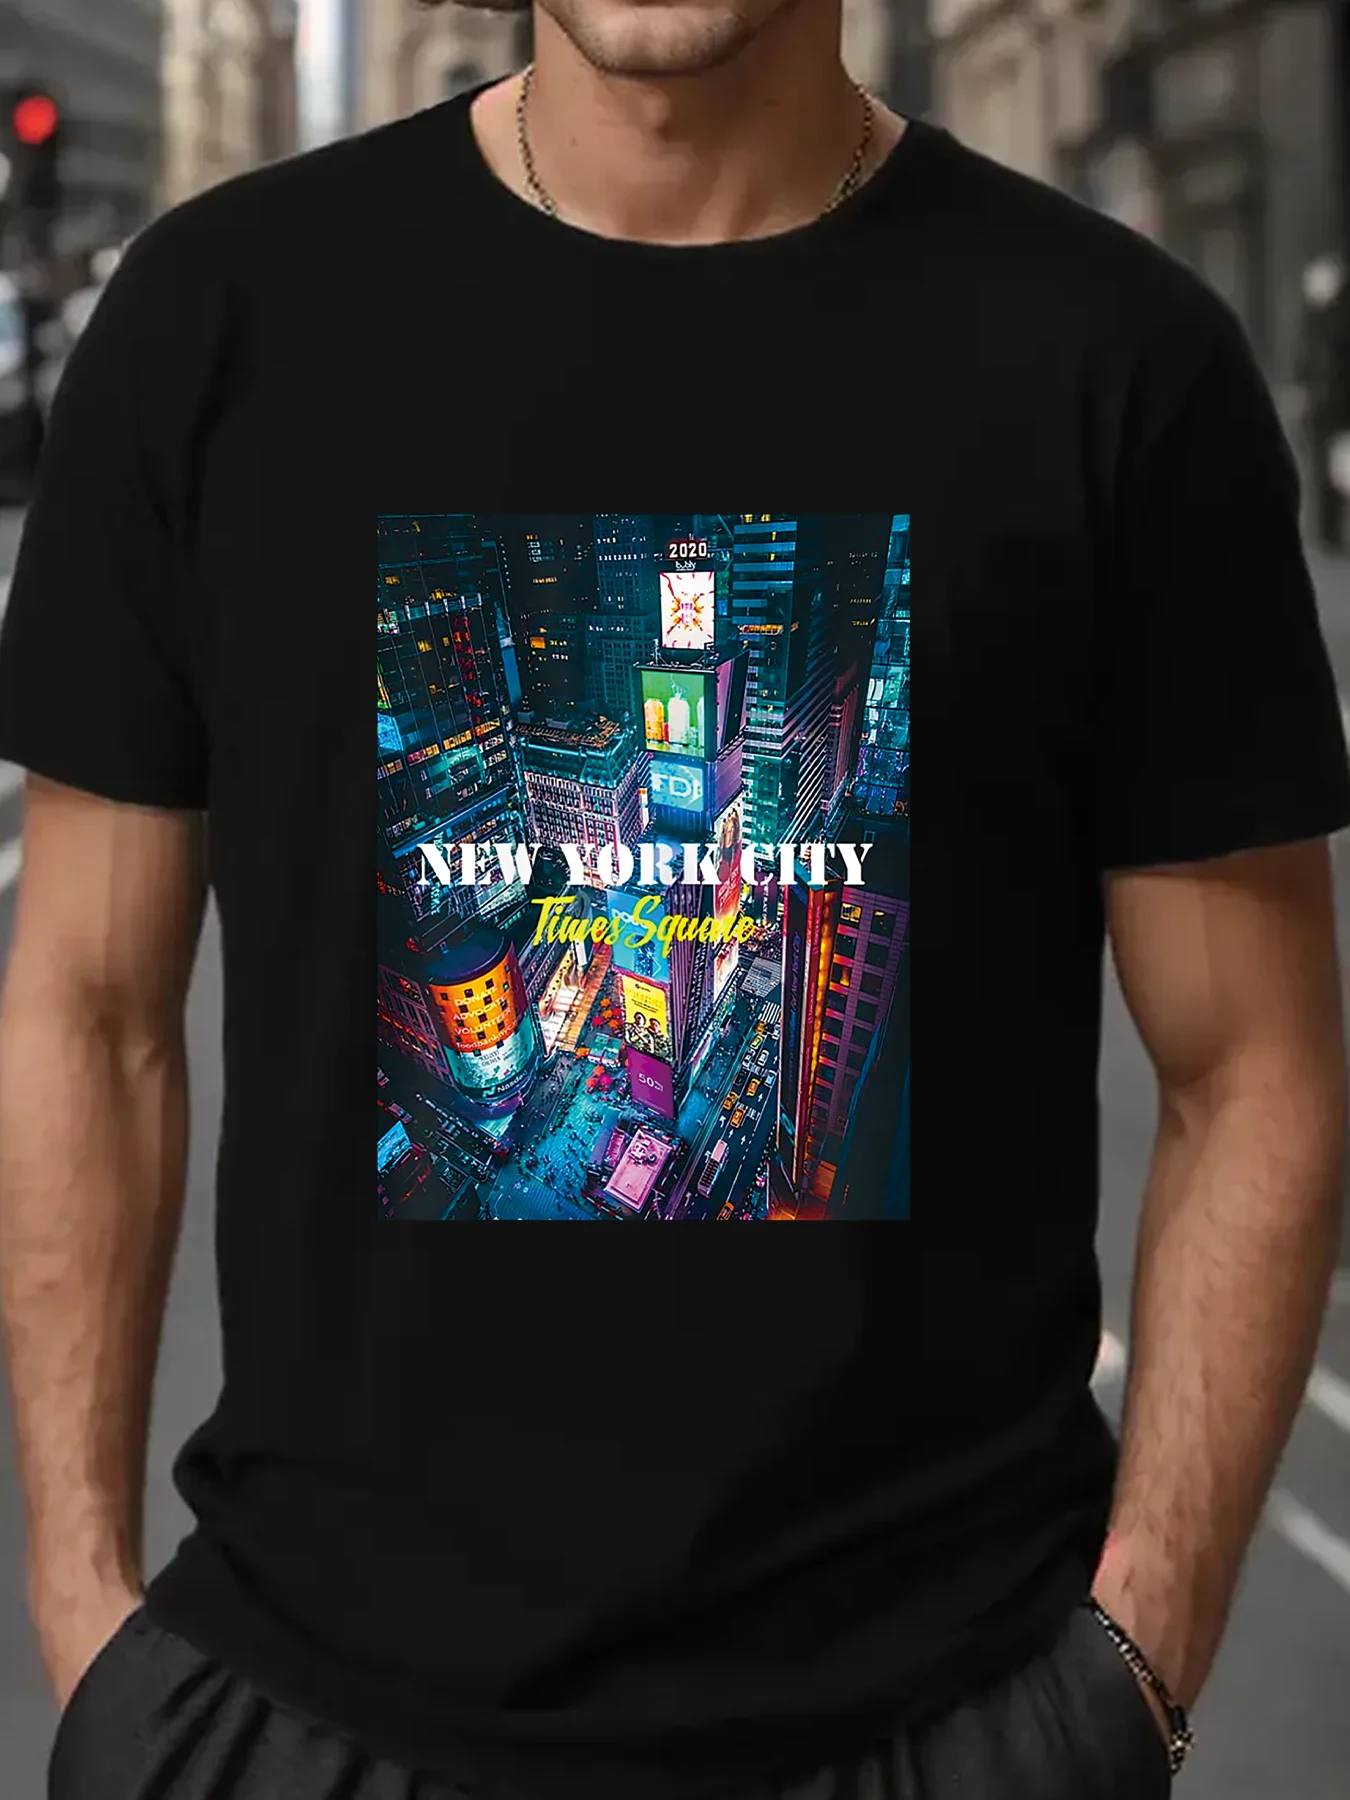 

New York City Times Square Skyline Tee Shirts Men's T-shirt Man Tops New Men T shirt Cotton Print Tee Tops Fashion Clothing